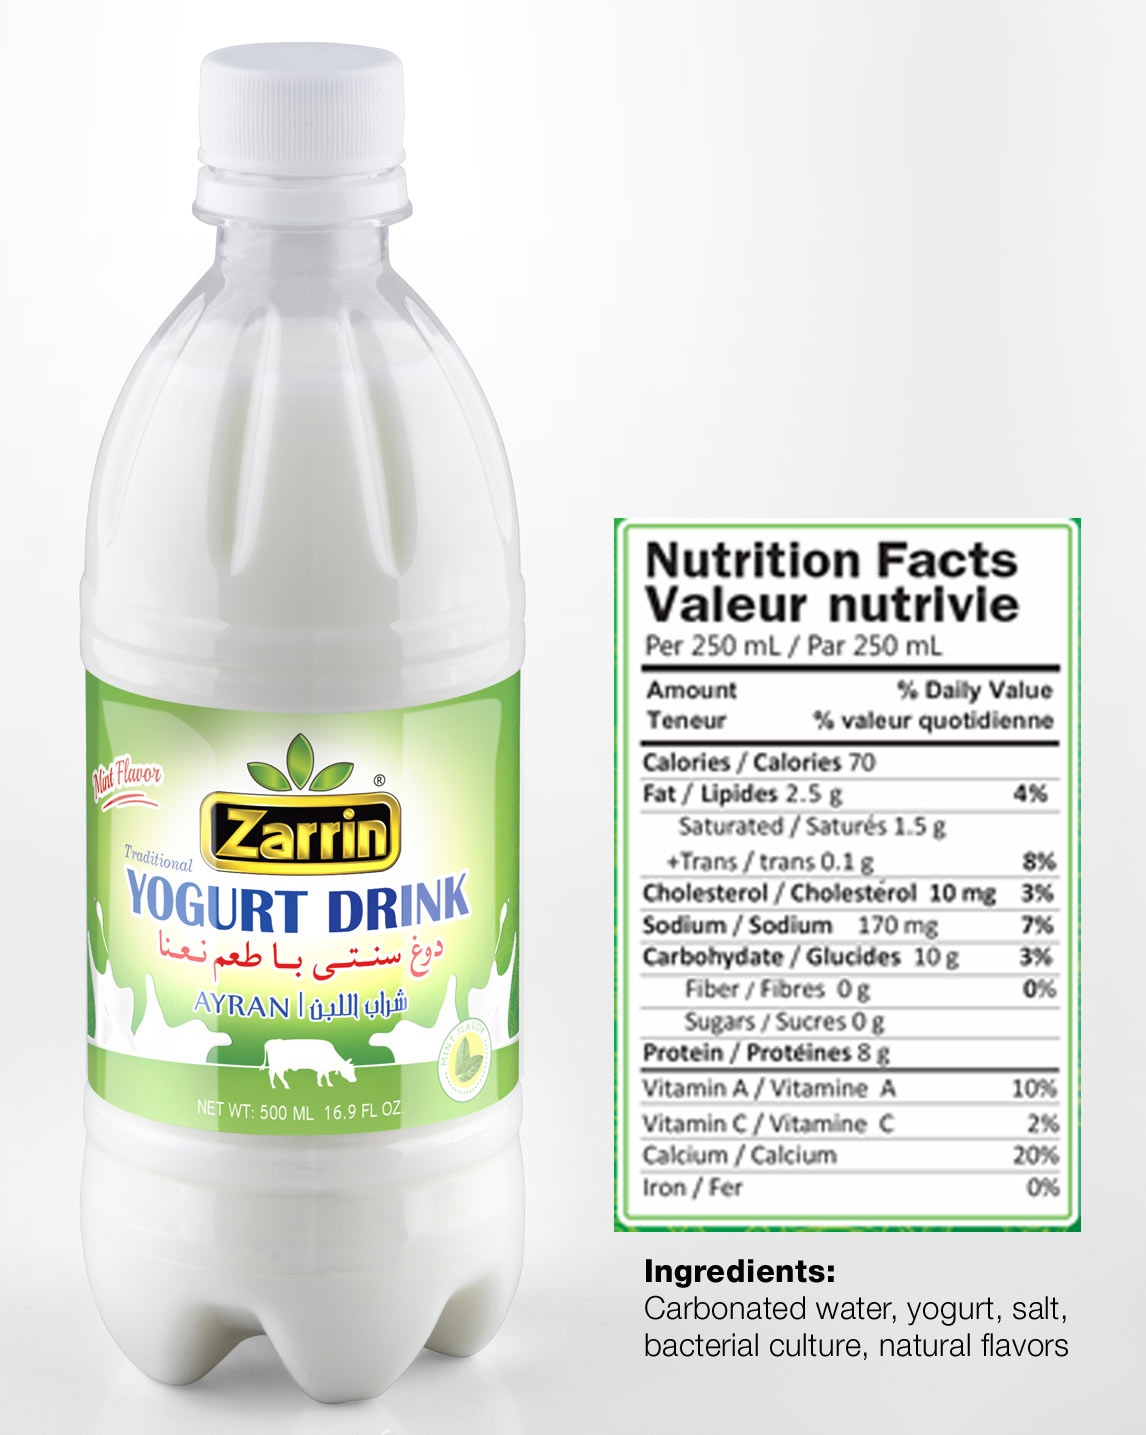 Yogurt drink with mint flavor by Zarrin.